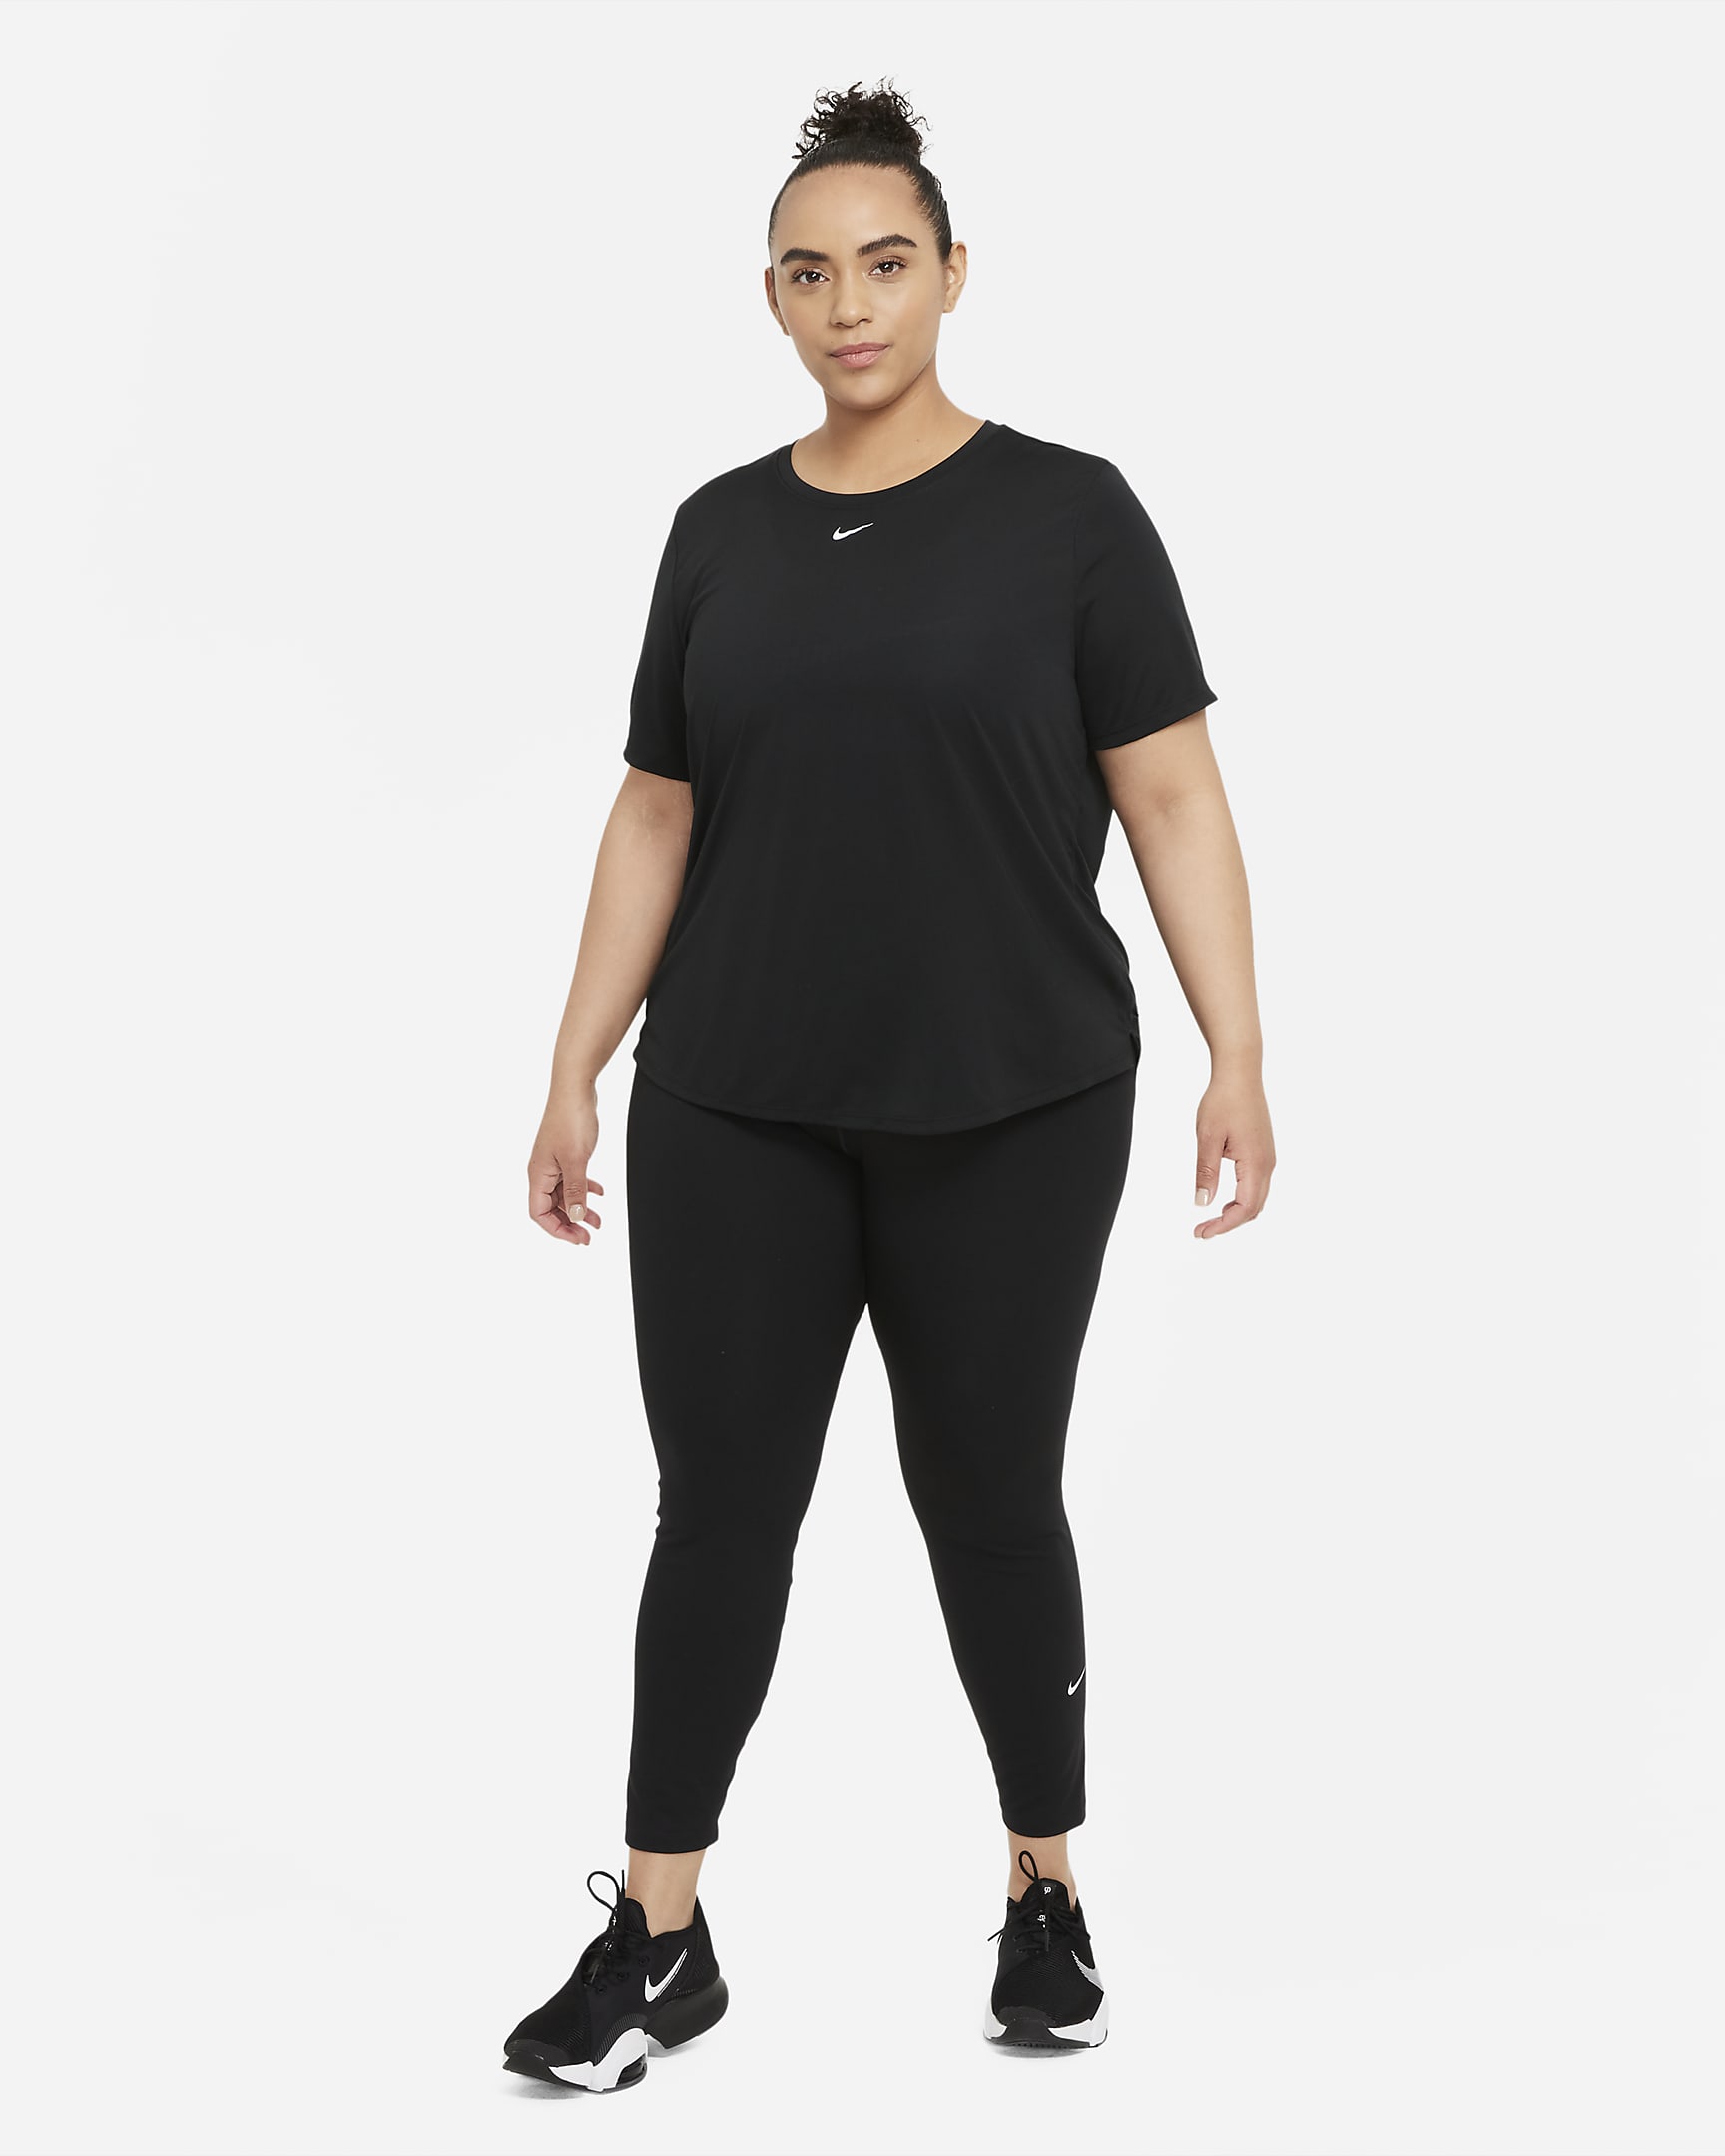 Nike Dri-FIT One Women's Standard-Fit Short-Sleeve Top (Plus Size). Nike PT